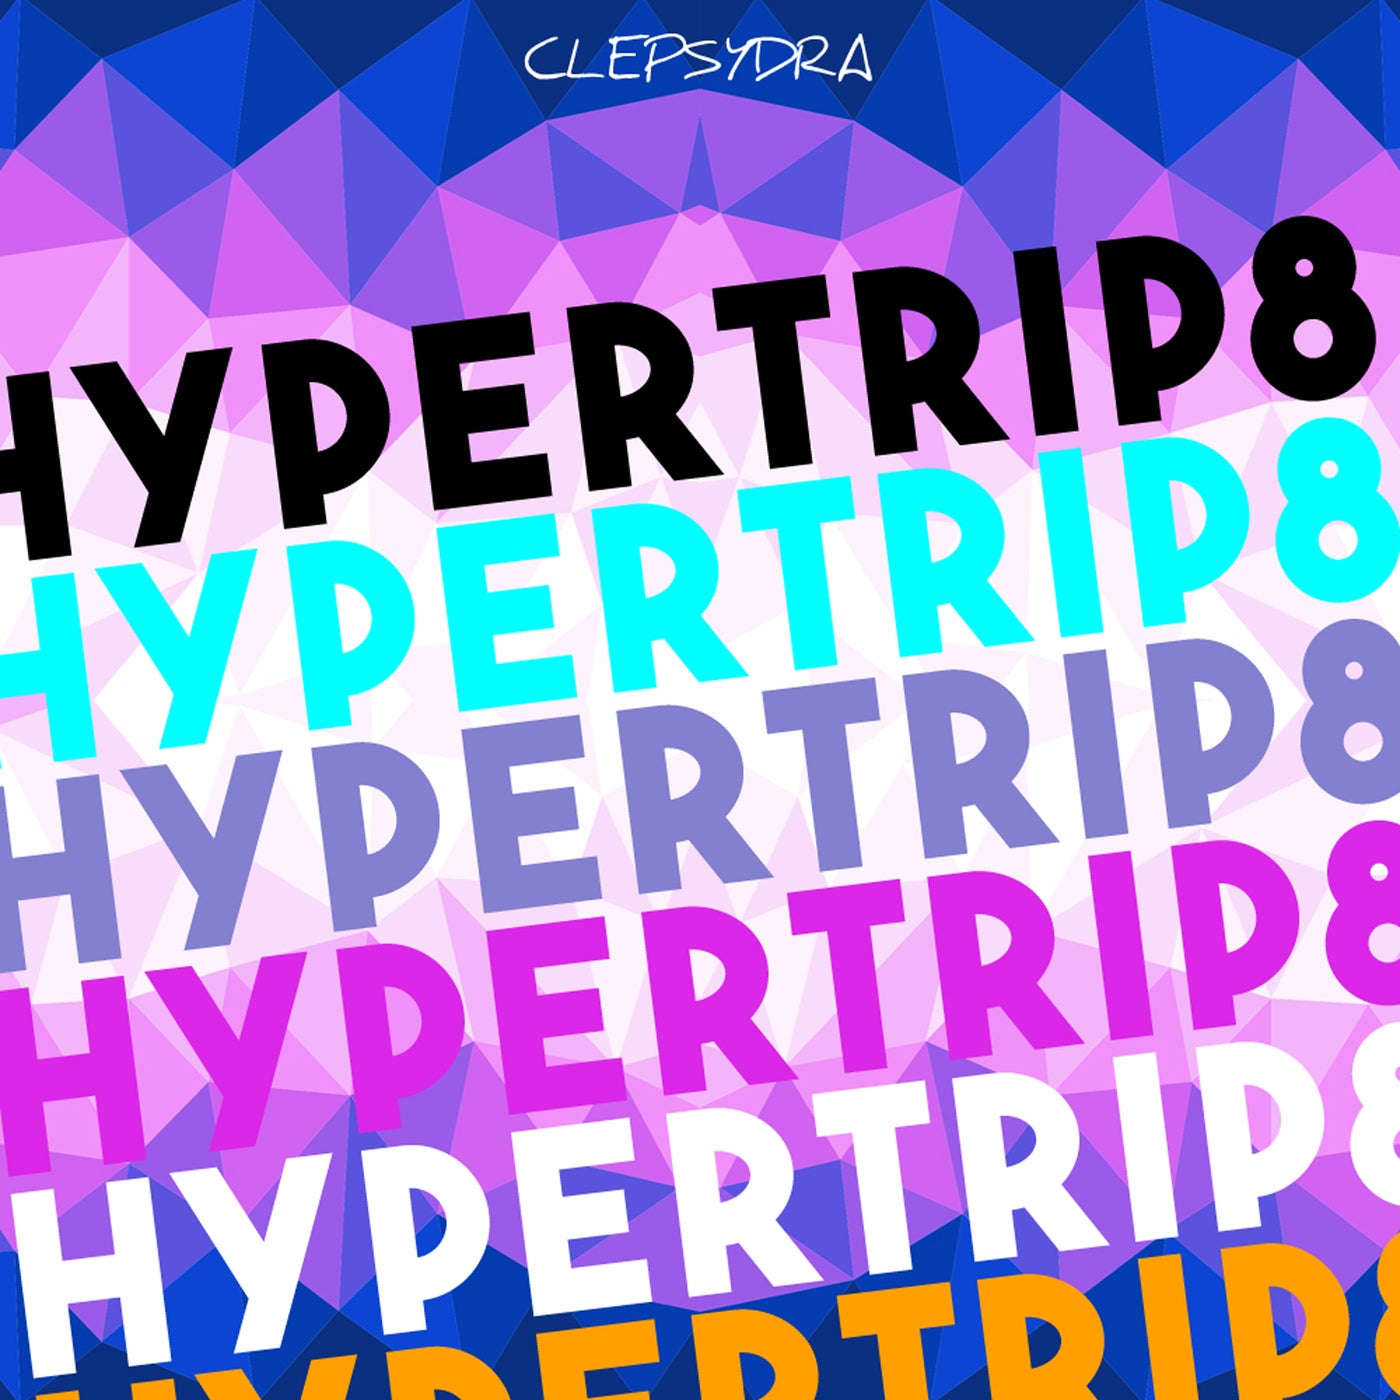 HyperTrip 8